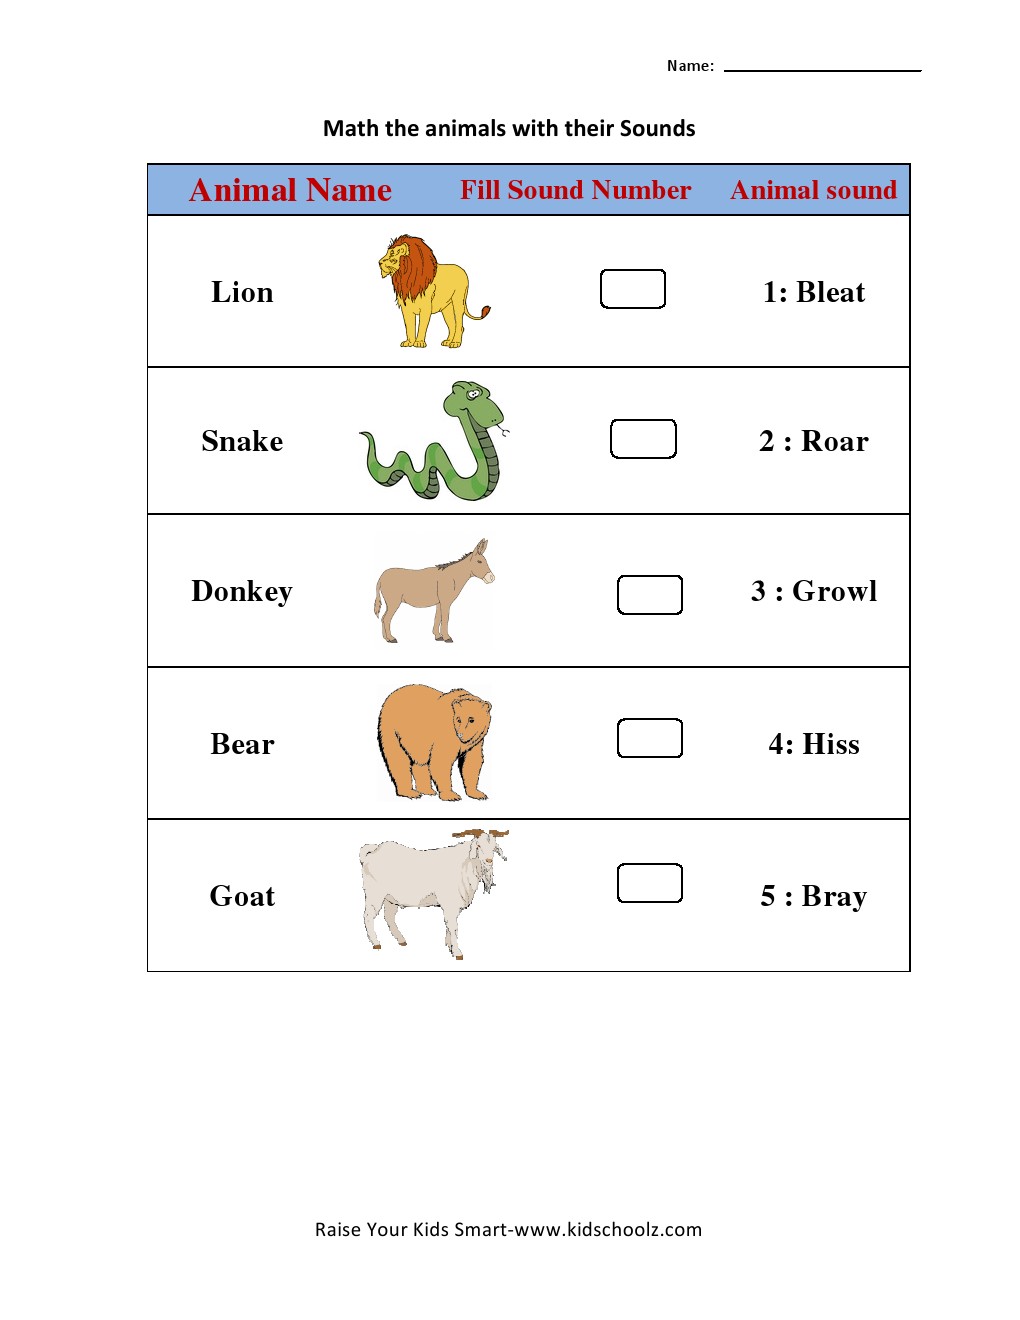 Animal Sound Matching Worksheets - Kidschoolz